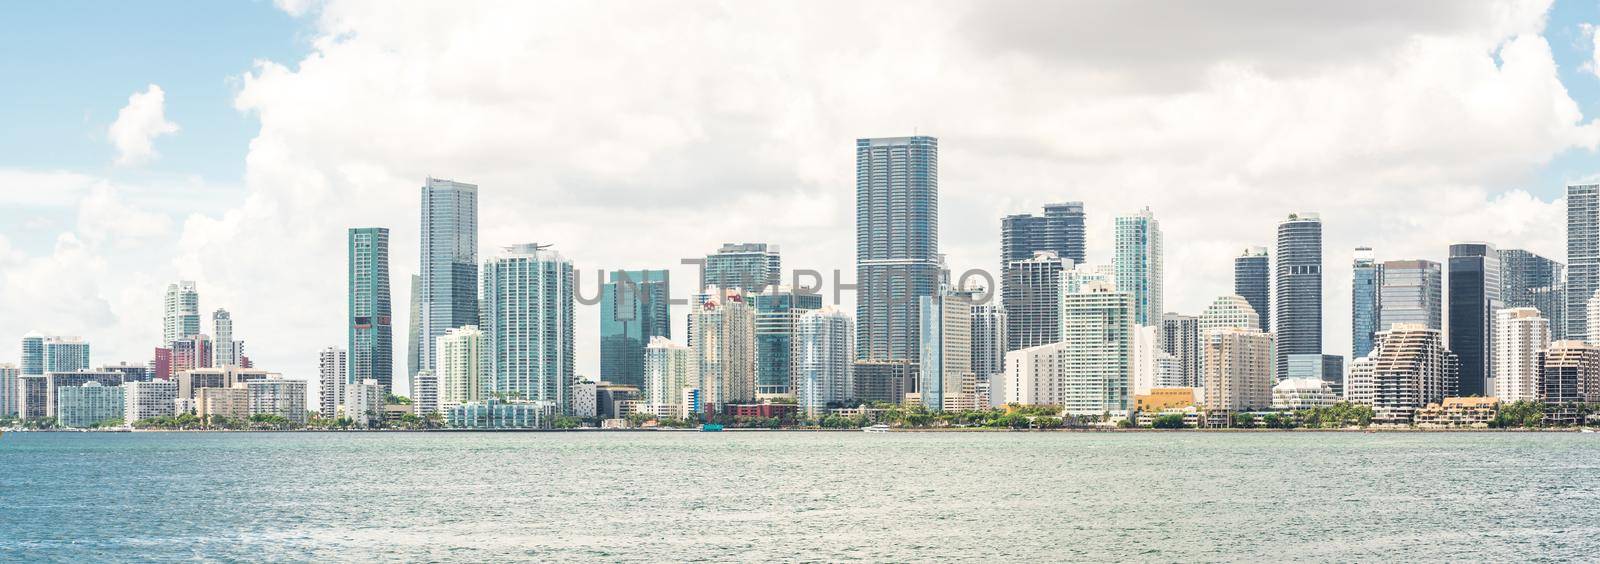 Miami Downtown skyline in daytime with Biscayne Bay